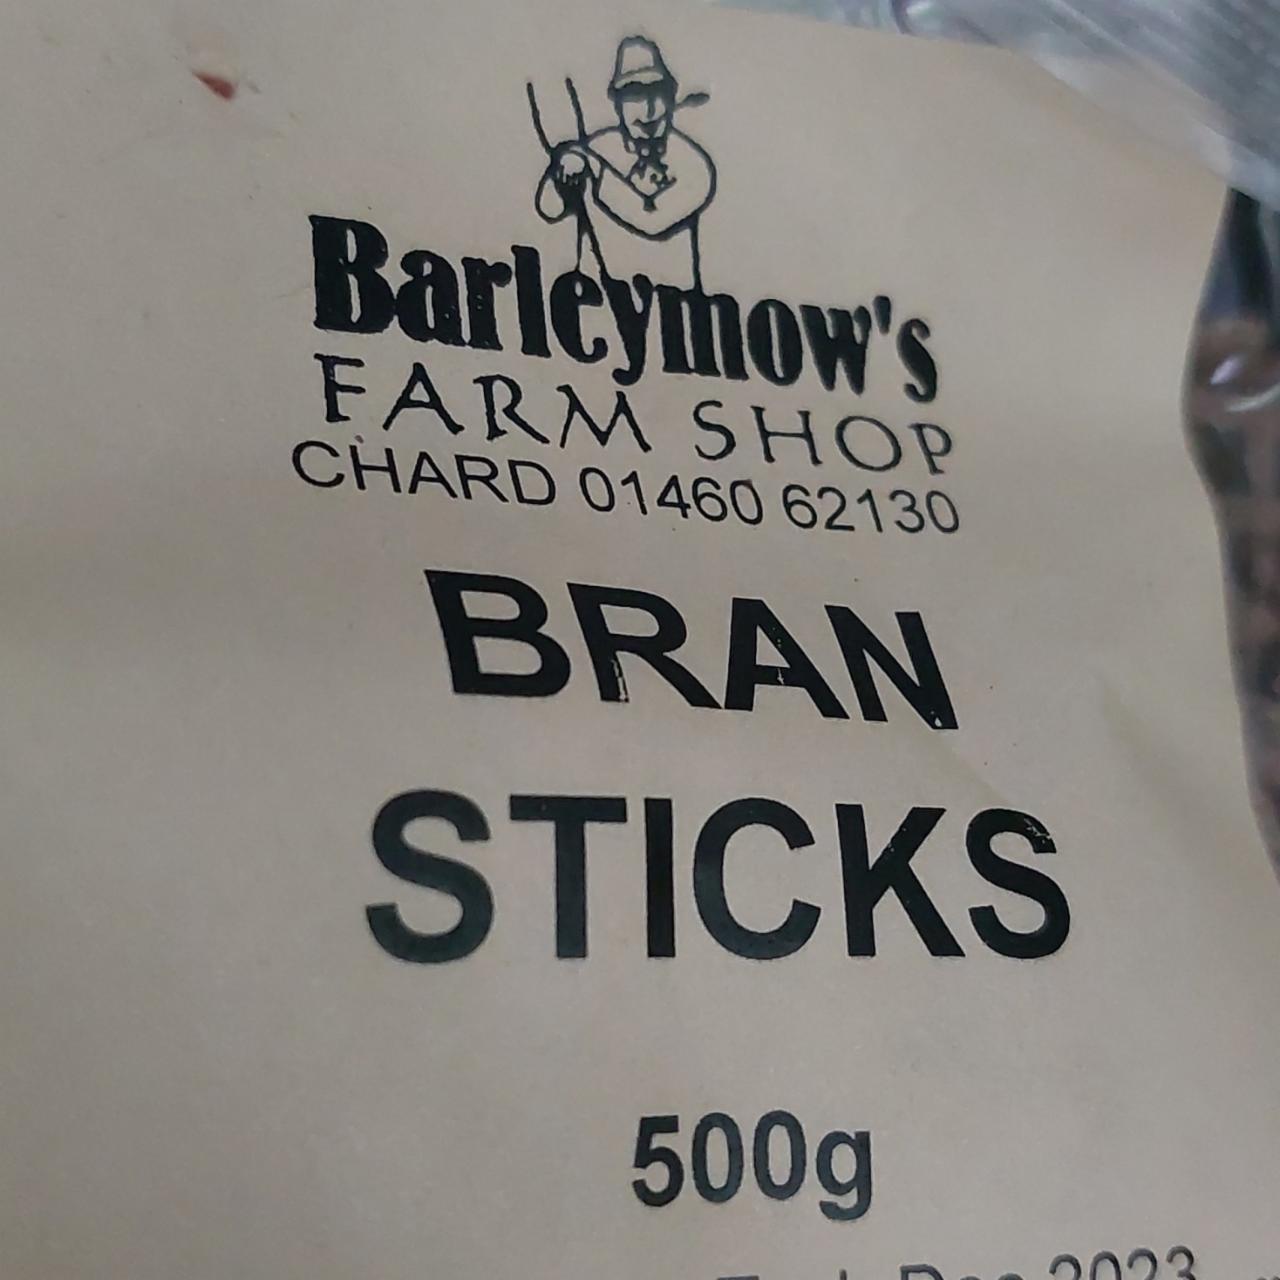 Fotografie - Bran Sticks Barleymow's Farm Shop